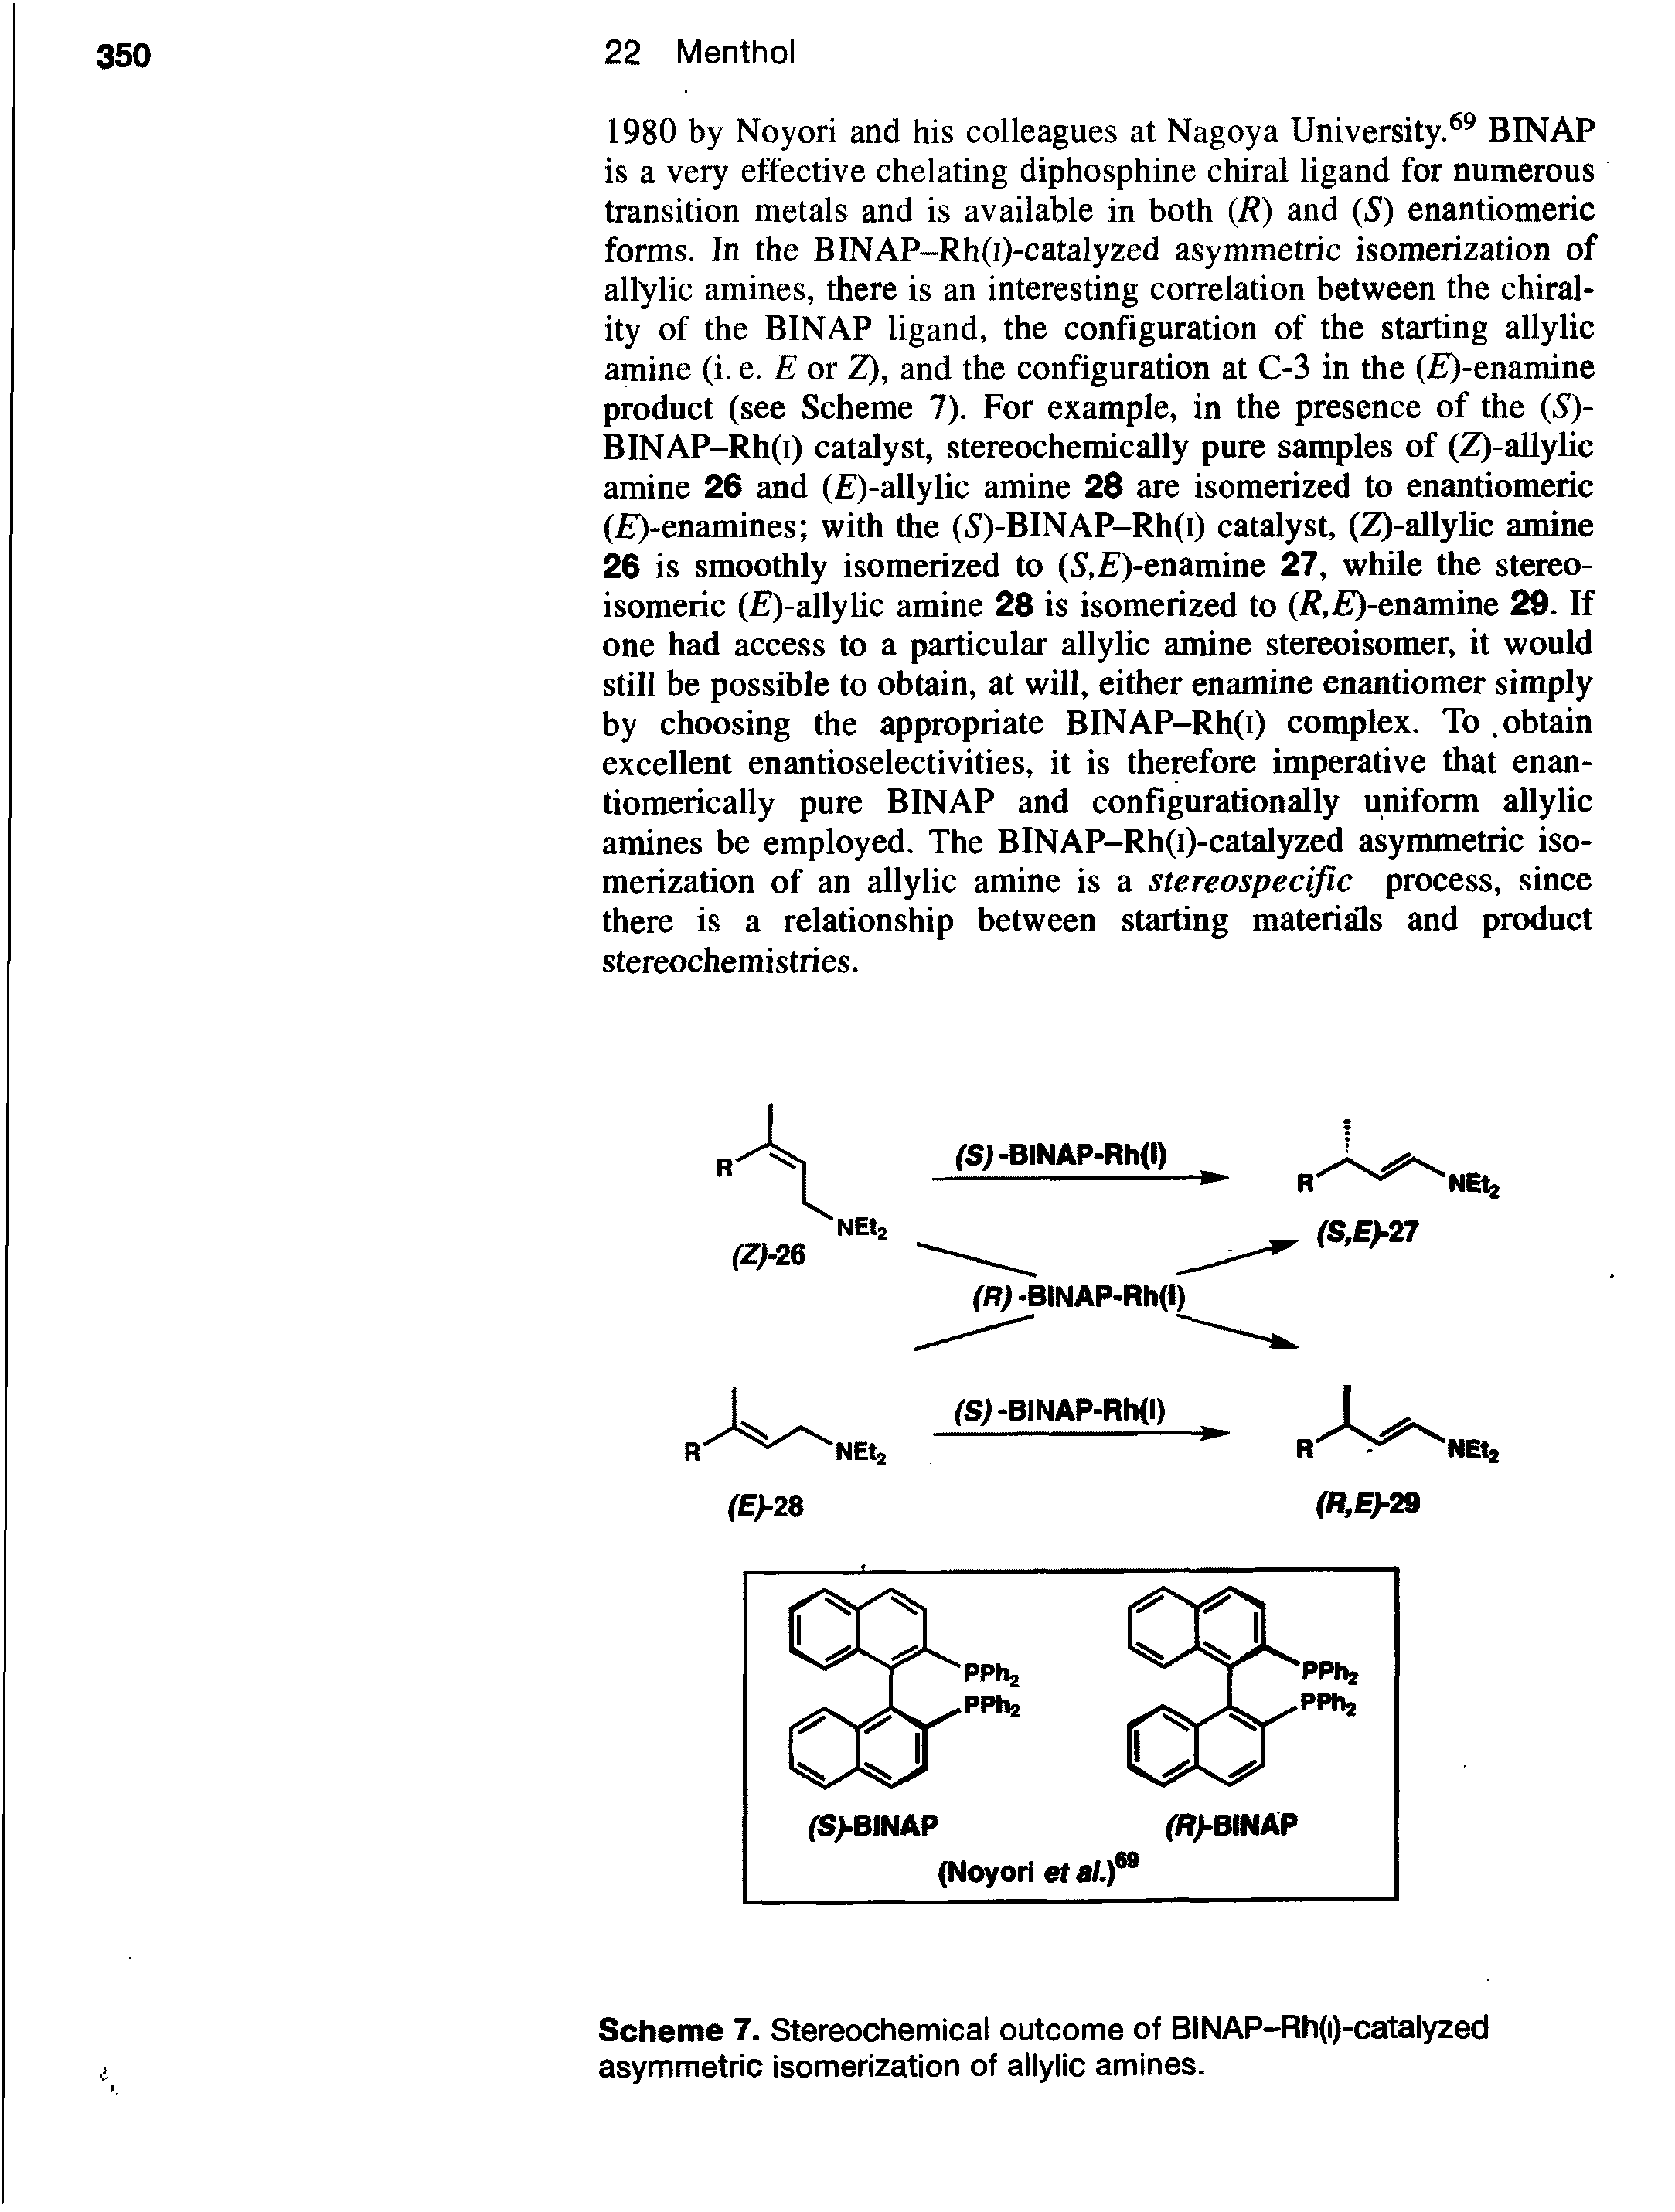 Scheme 7. Stereochemical outcome of BINAP-Rh(i)-catalyzed asymmetric isomerization of allylic amines.